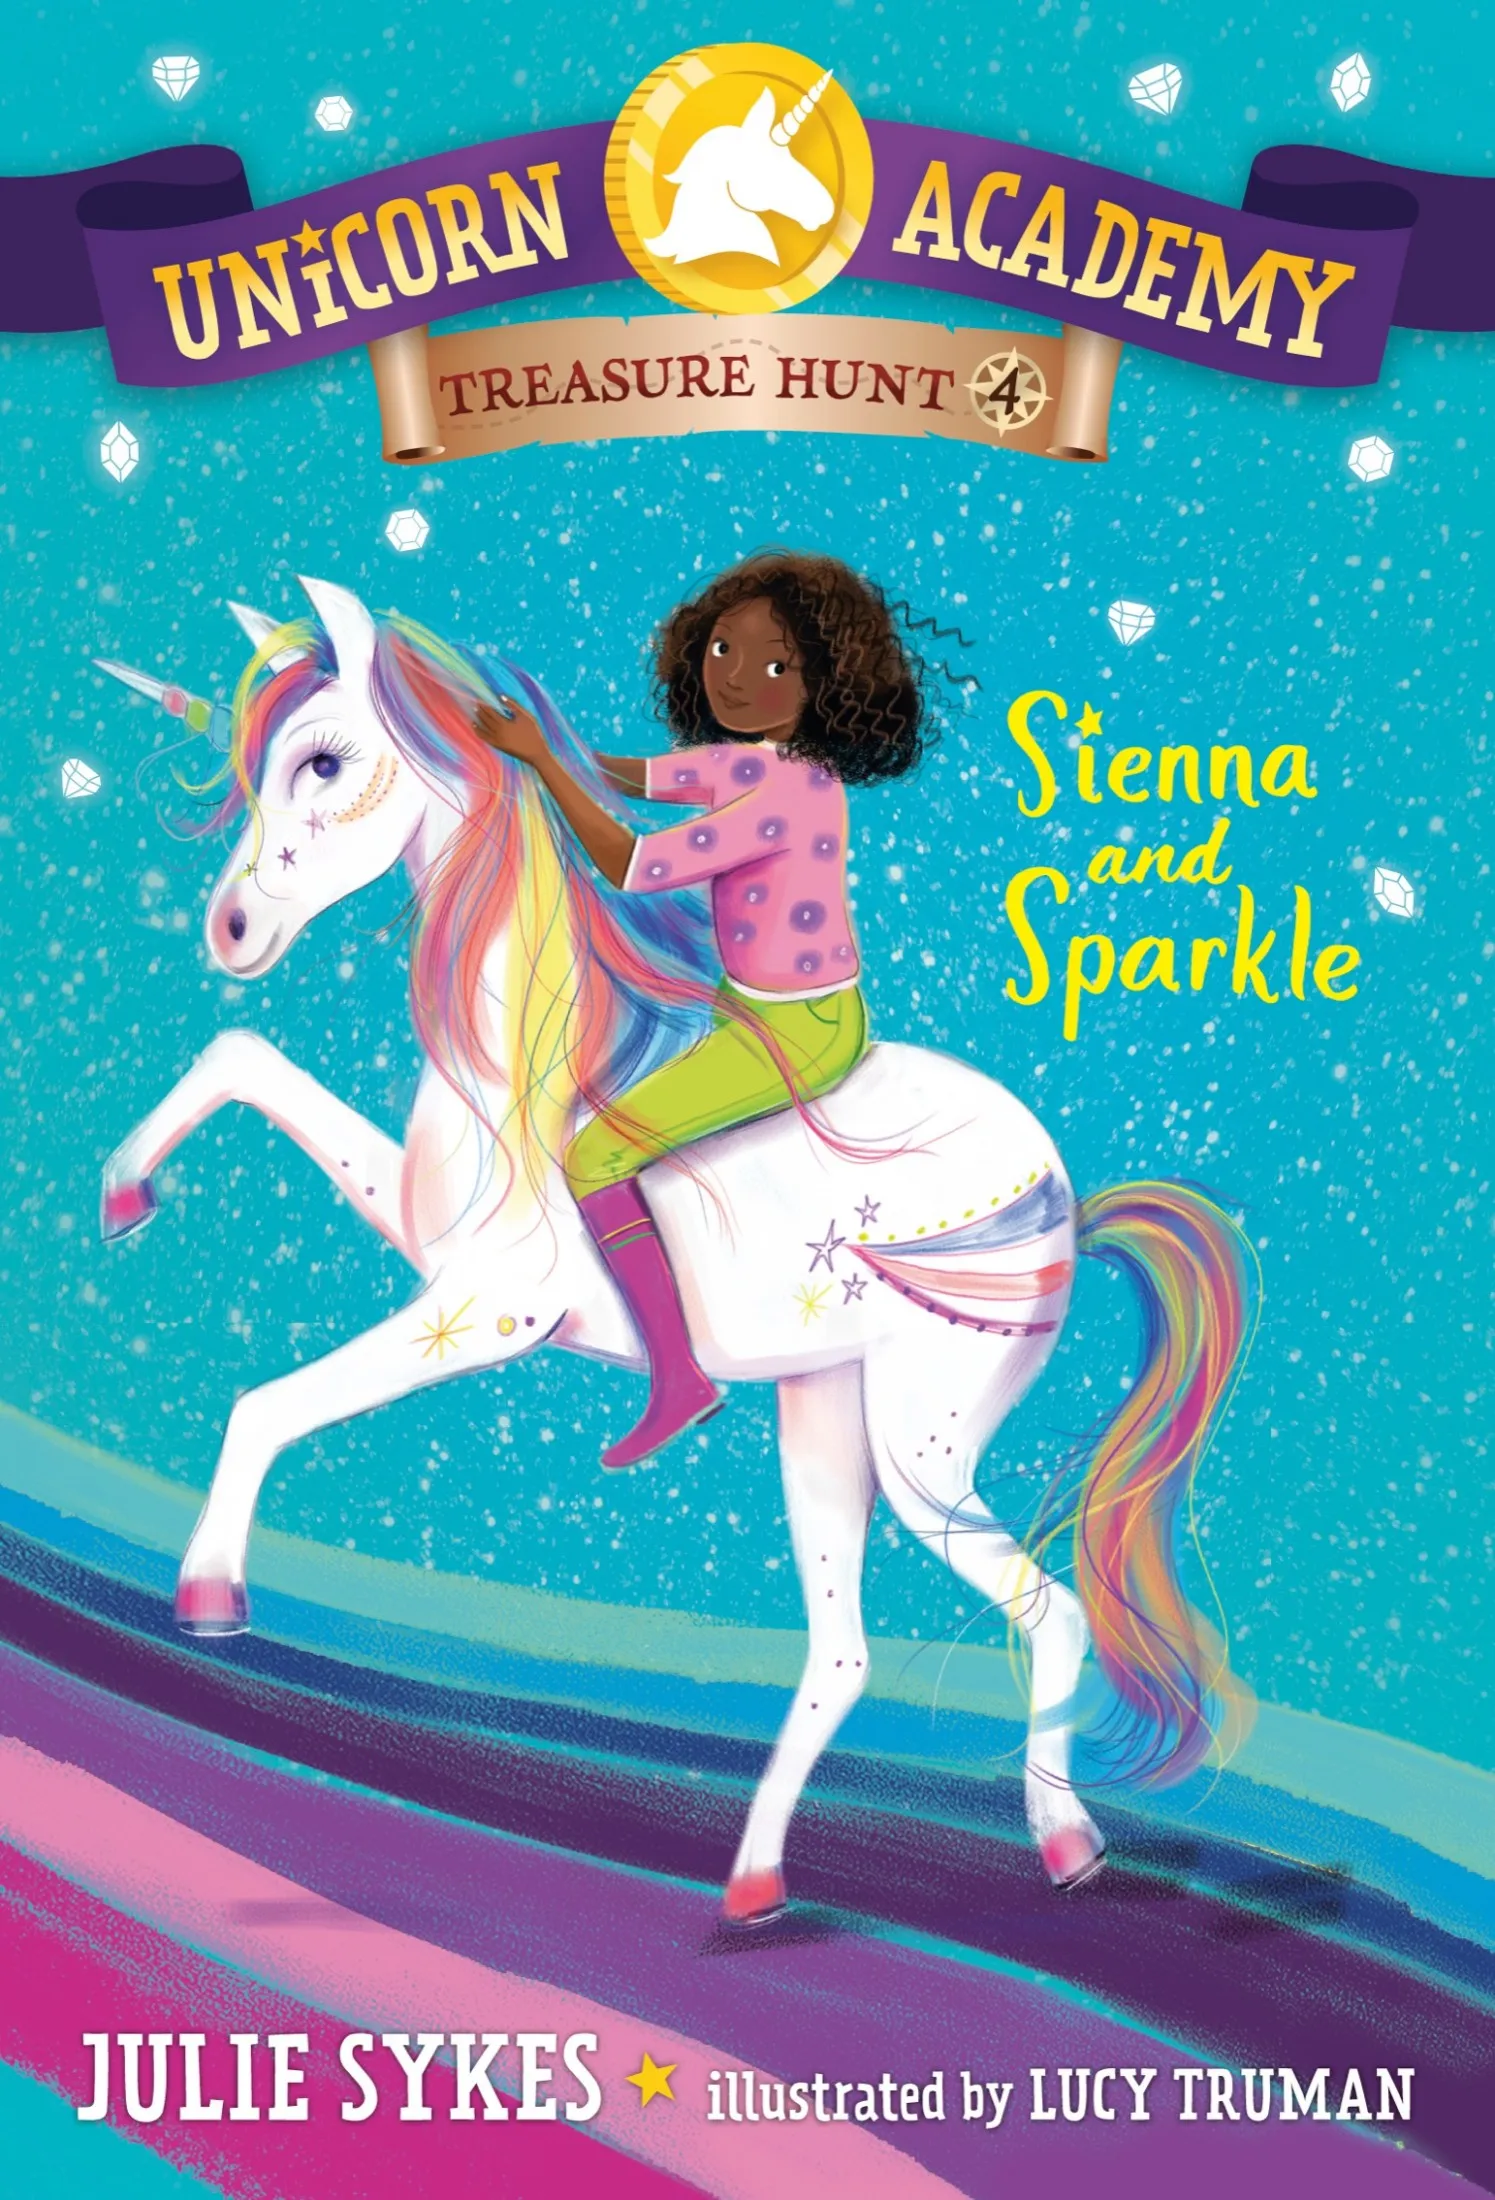 Sienna and Sparkle (Unicorn Academy Treasure Hunt #4)